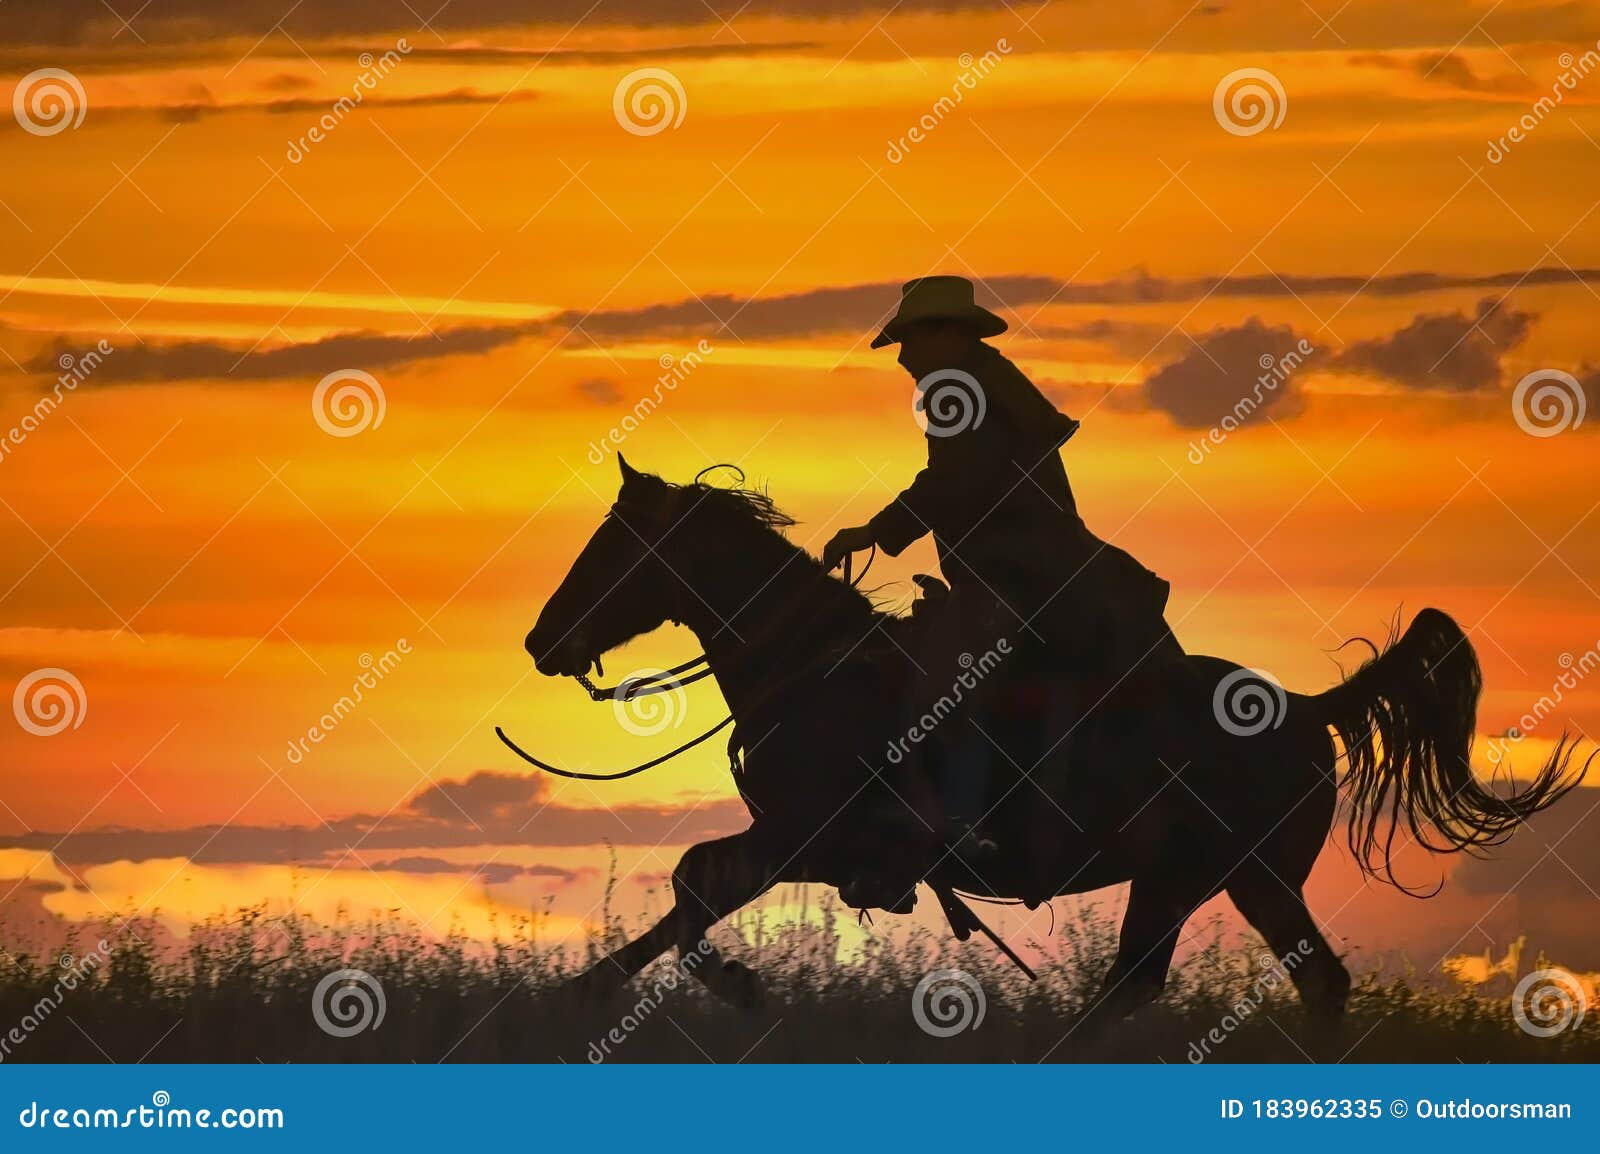 cowboy on horseback silhouette